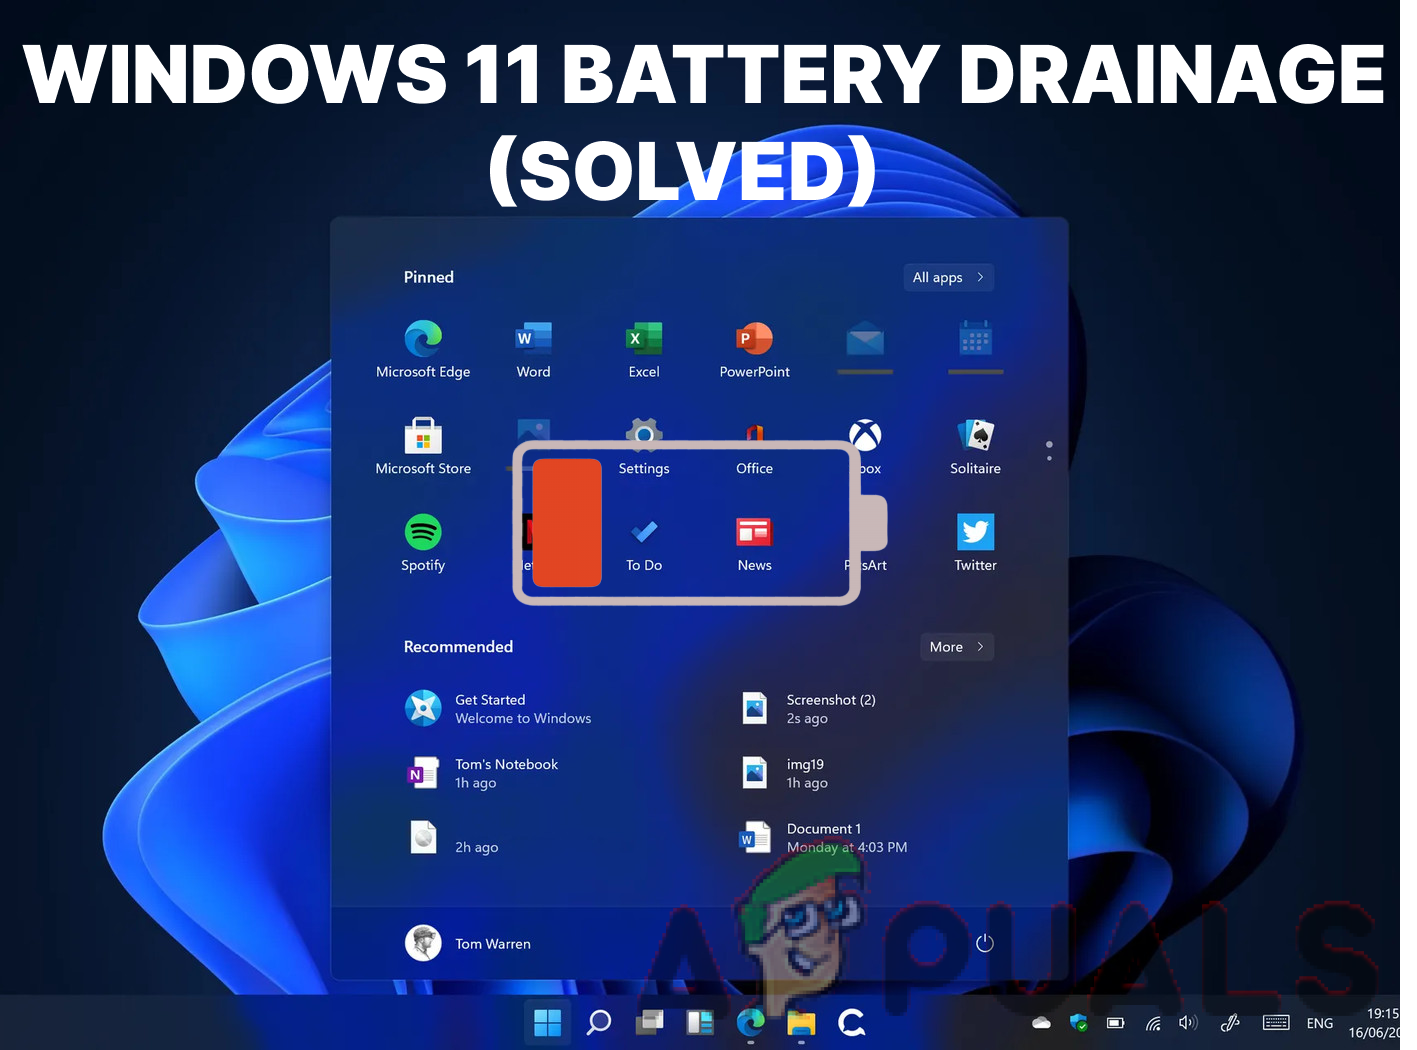 Windows 11 Drainage Desktop